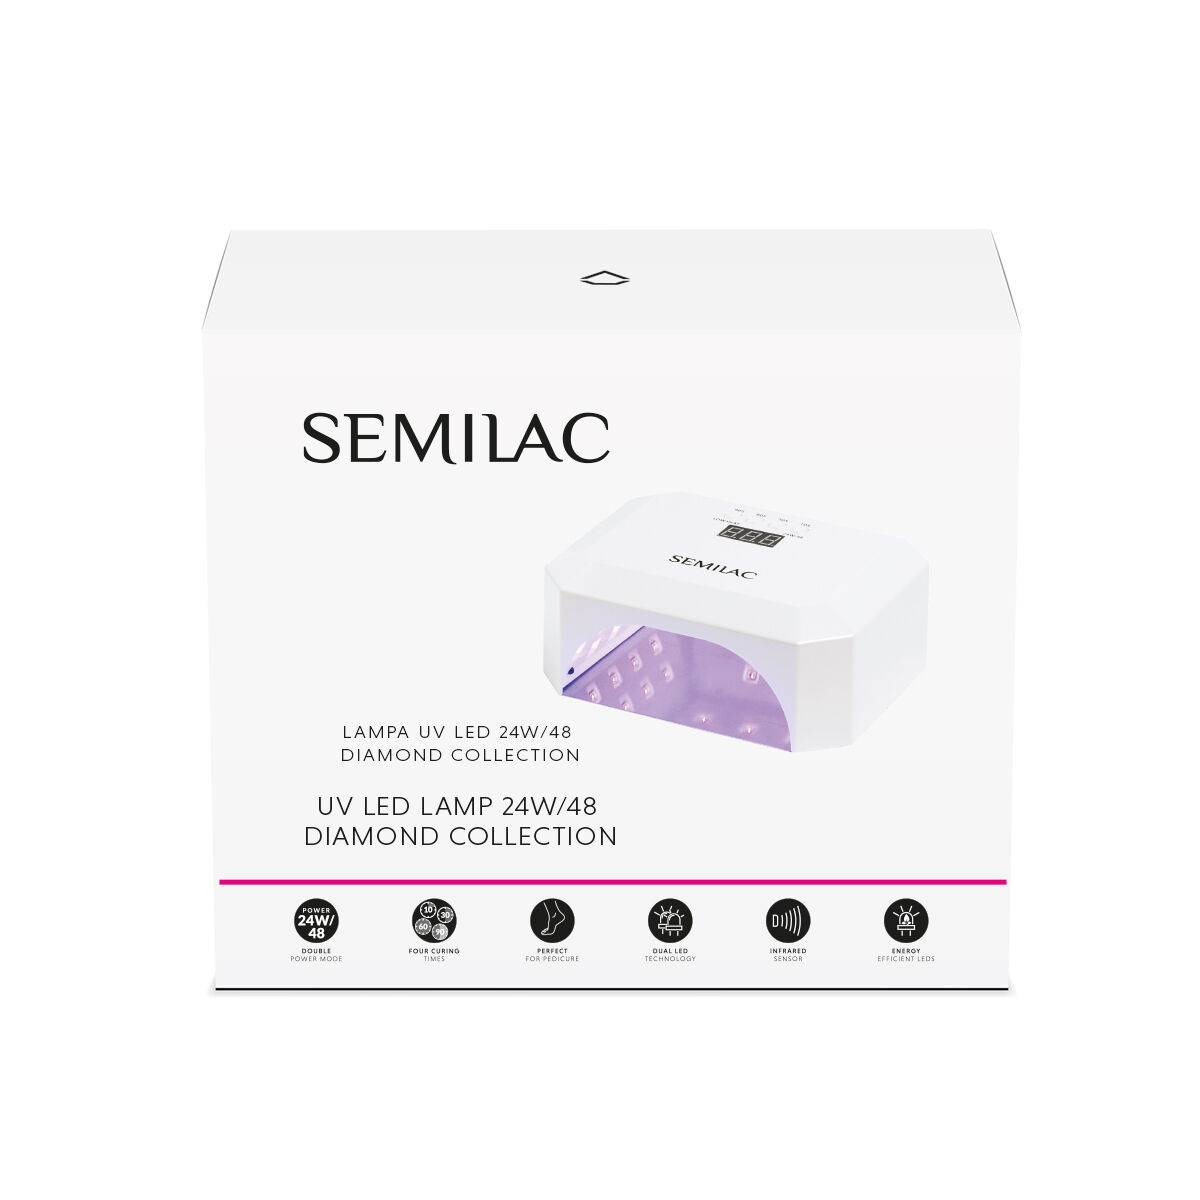 Semilac Lampe UV LED Diamond Collection 24W/48 ○ Semilac